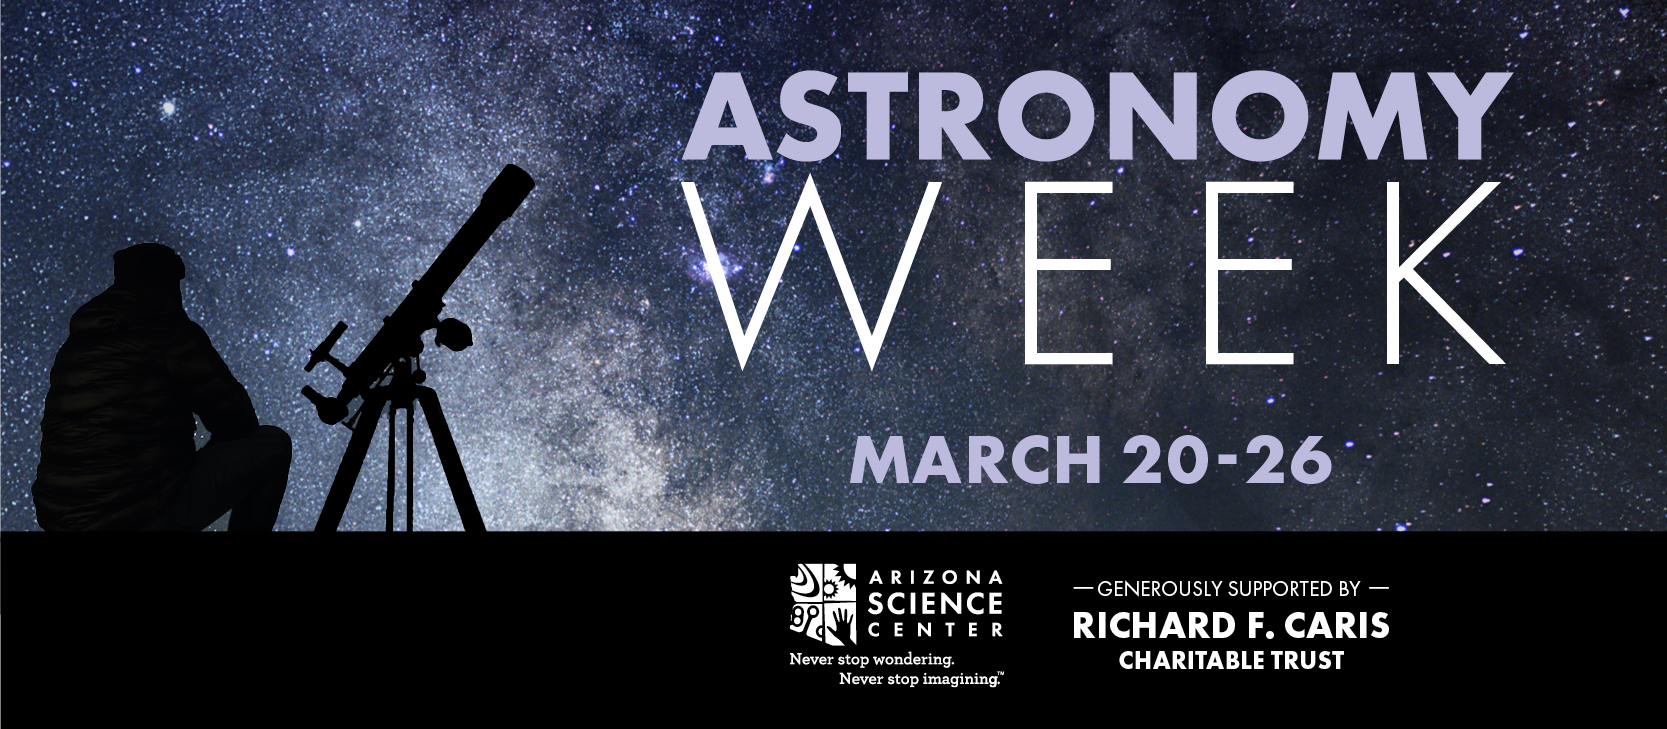 Astronomy Week at Arizona Science Center